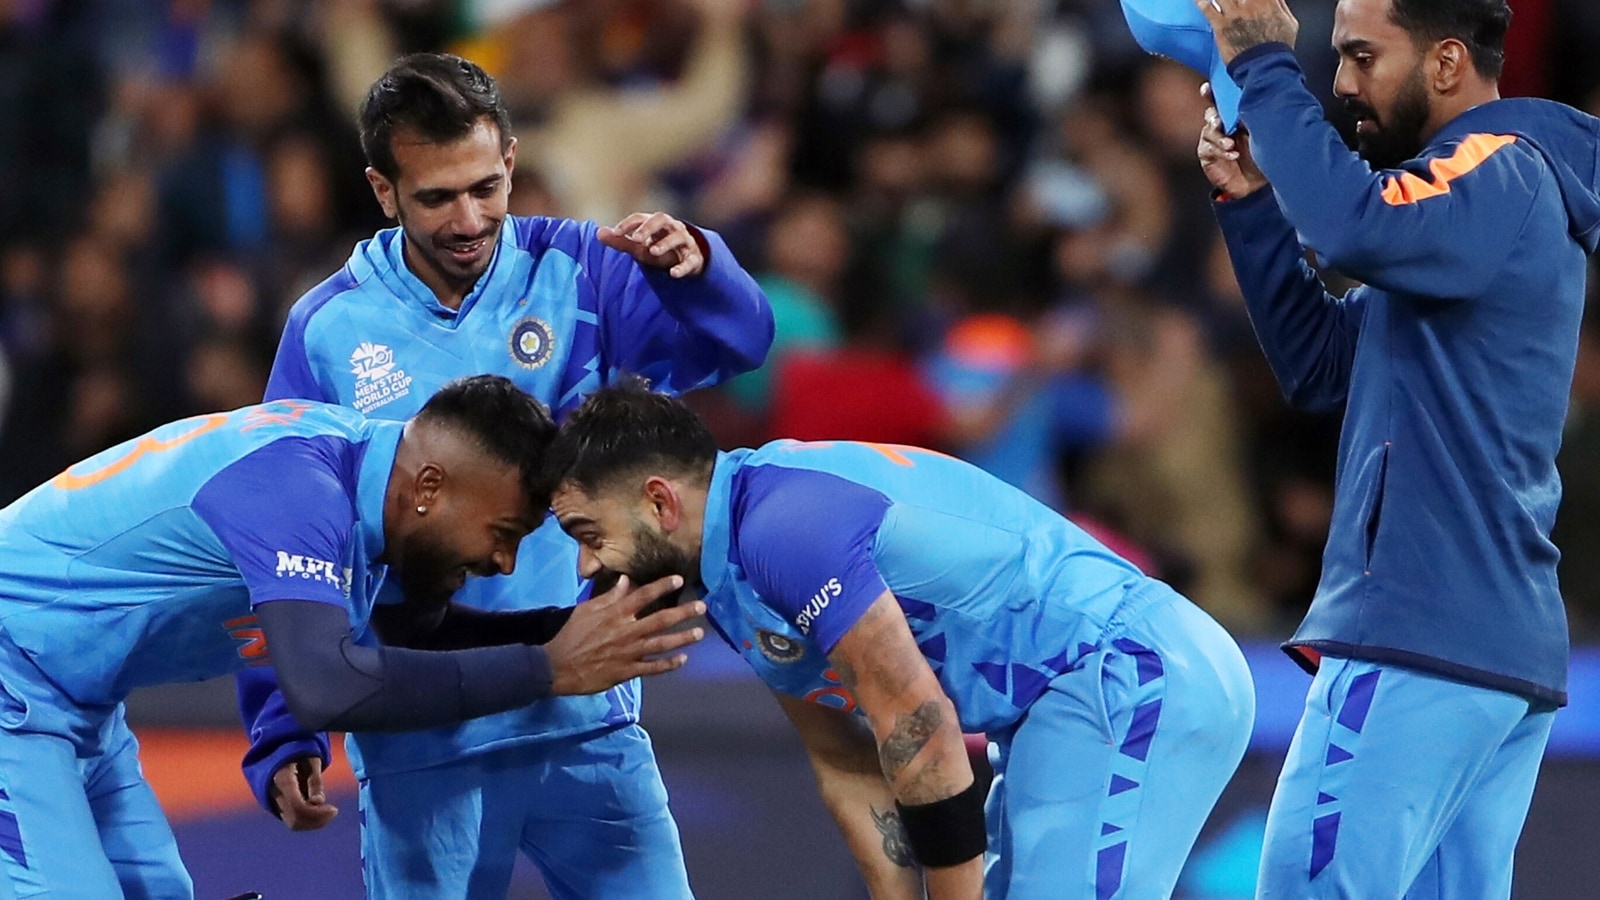 Watch Kohlis teary-eyed, emotional celebration touches hearts after win vs PAK Cricket